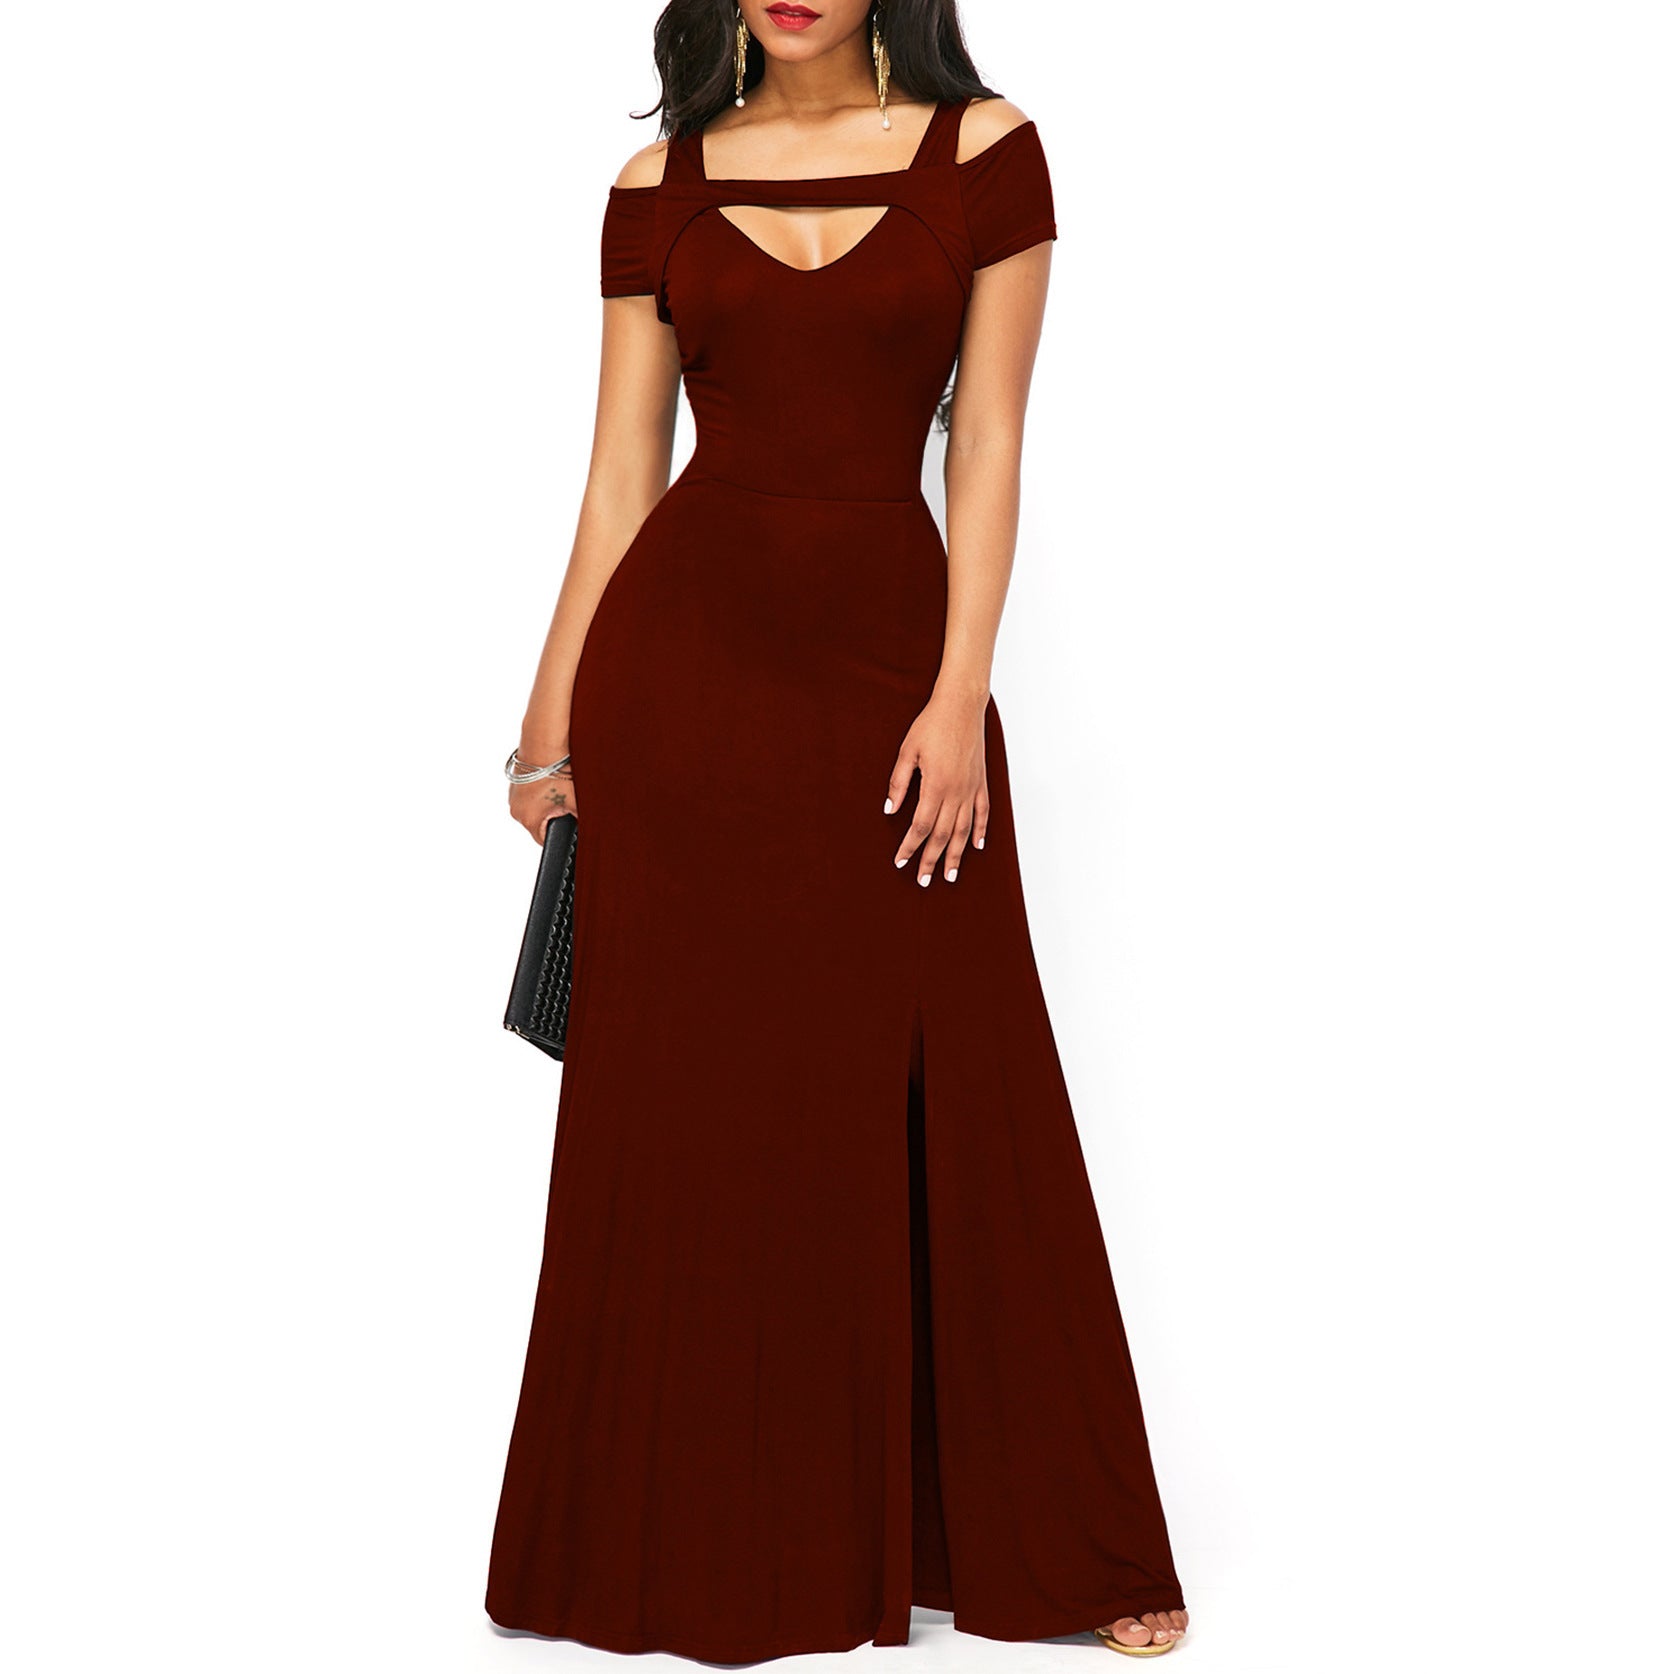 Elegant Strapless Slim Fit Cocktail Dress